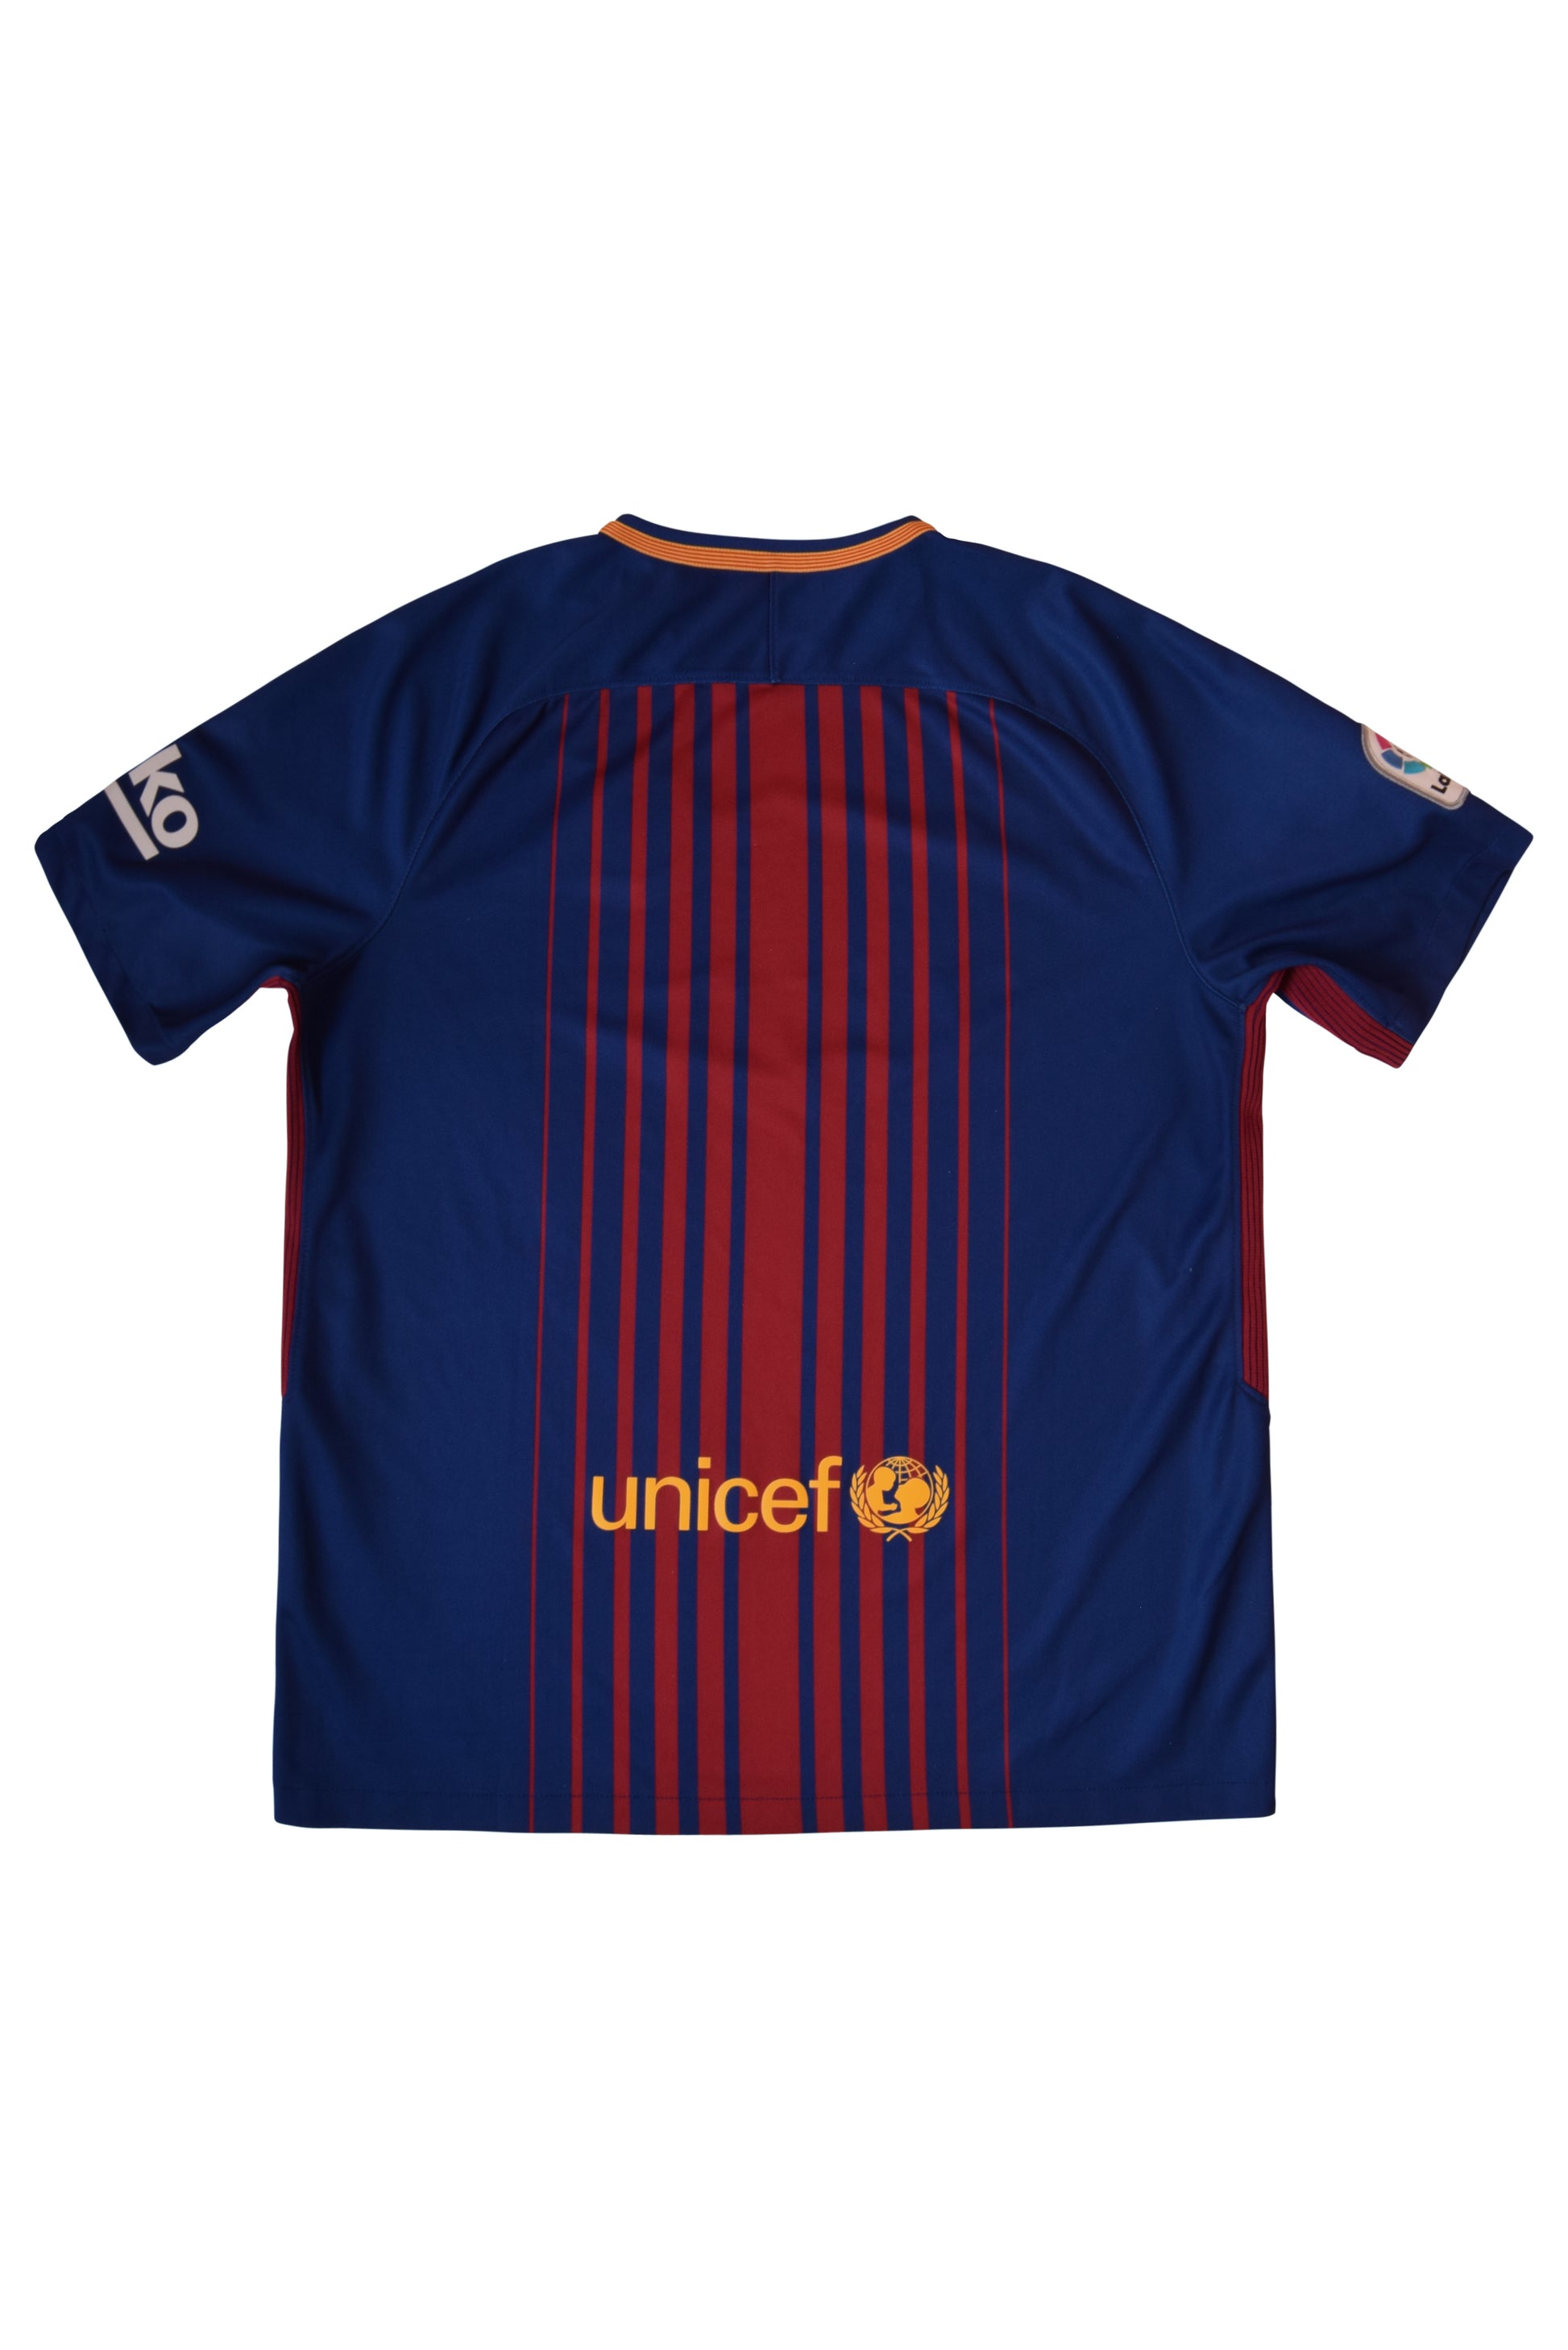 FC Barcelona Nike Home Football Shirt 2017-2018 Size L Red Blue Rakuten